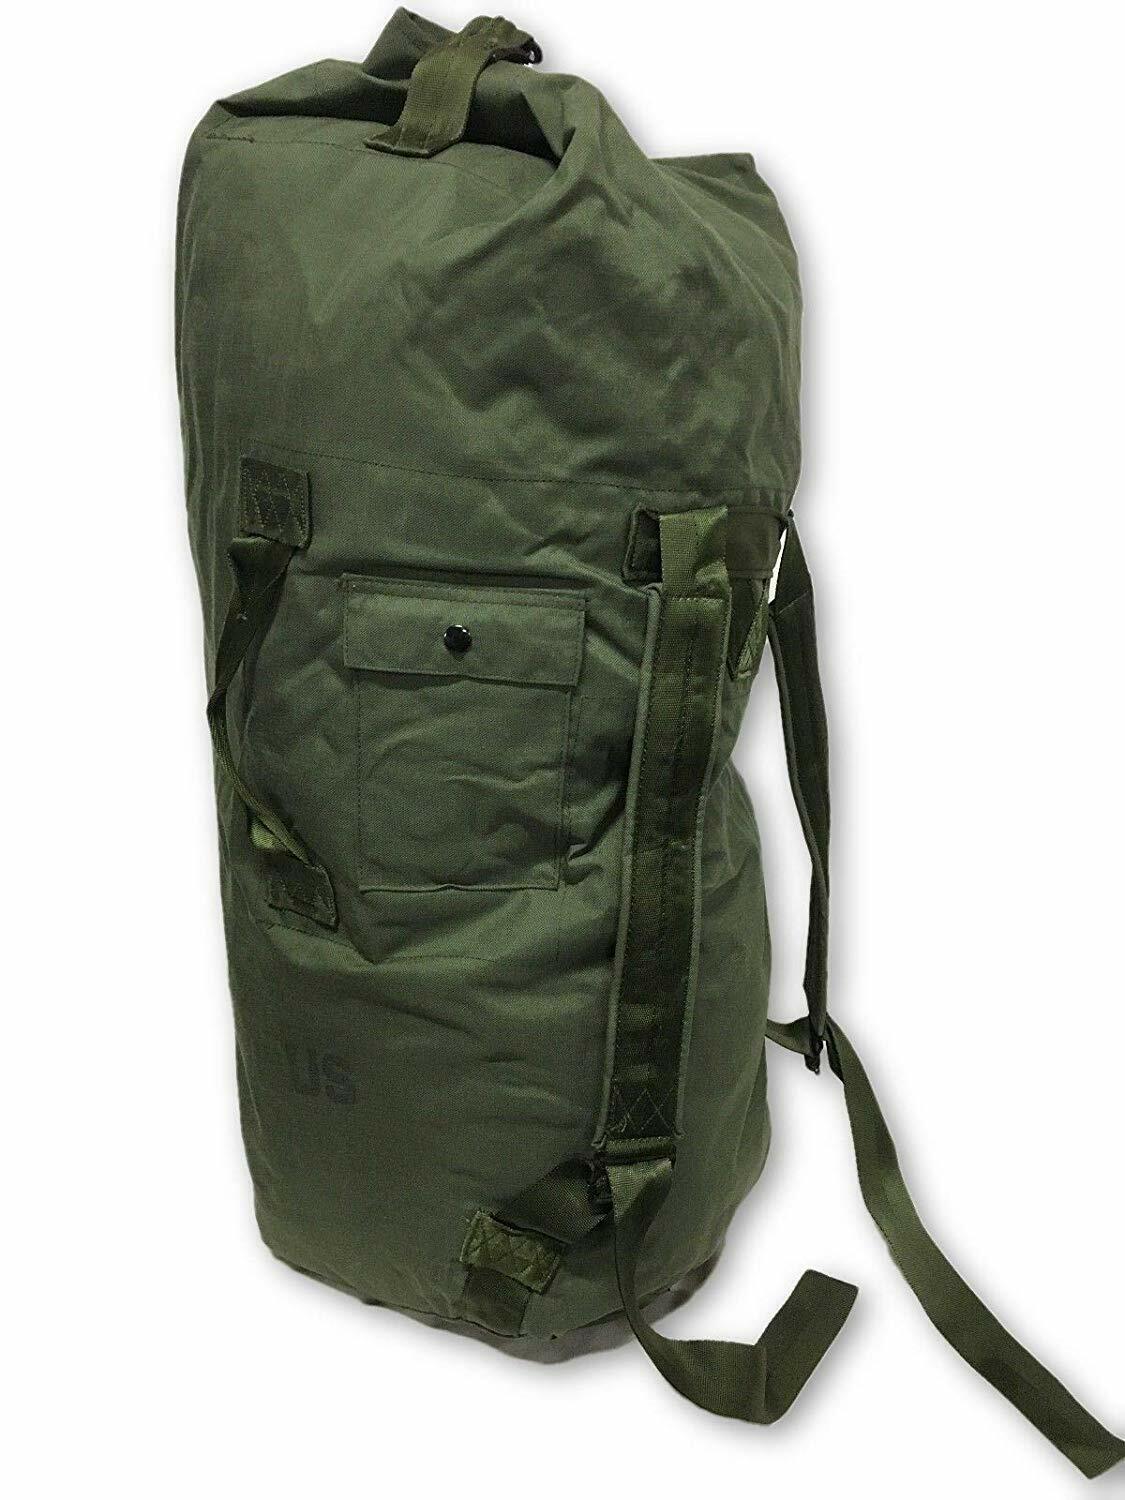 FAIR Military Duffle Bag Heavy Duty USMC Issue Duffel Seabag USGI Nylon cordura 